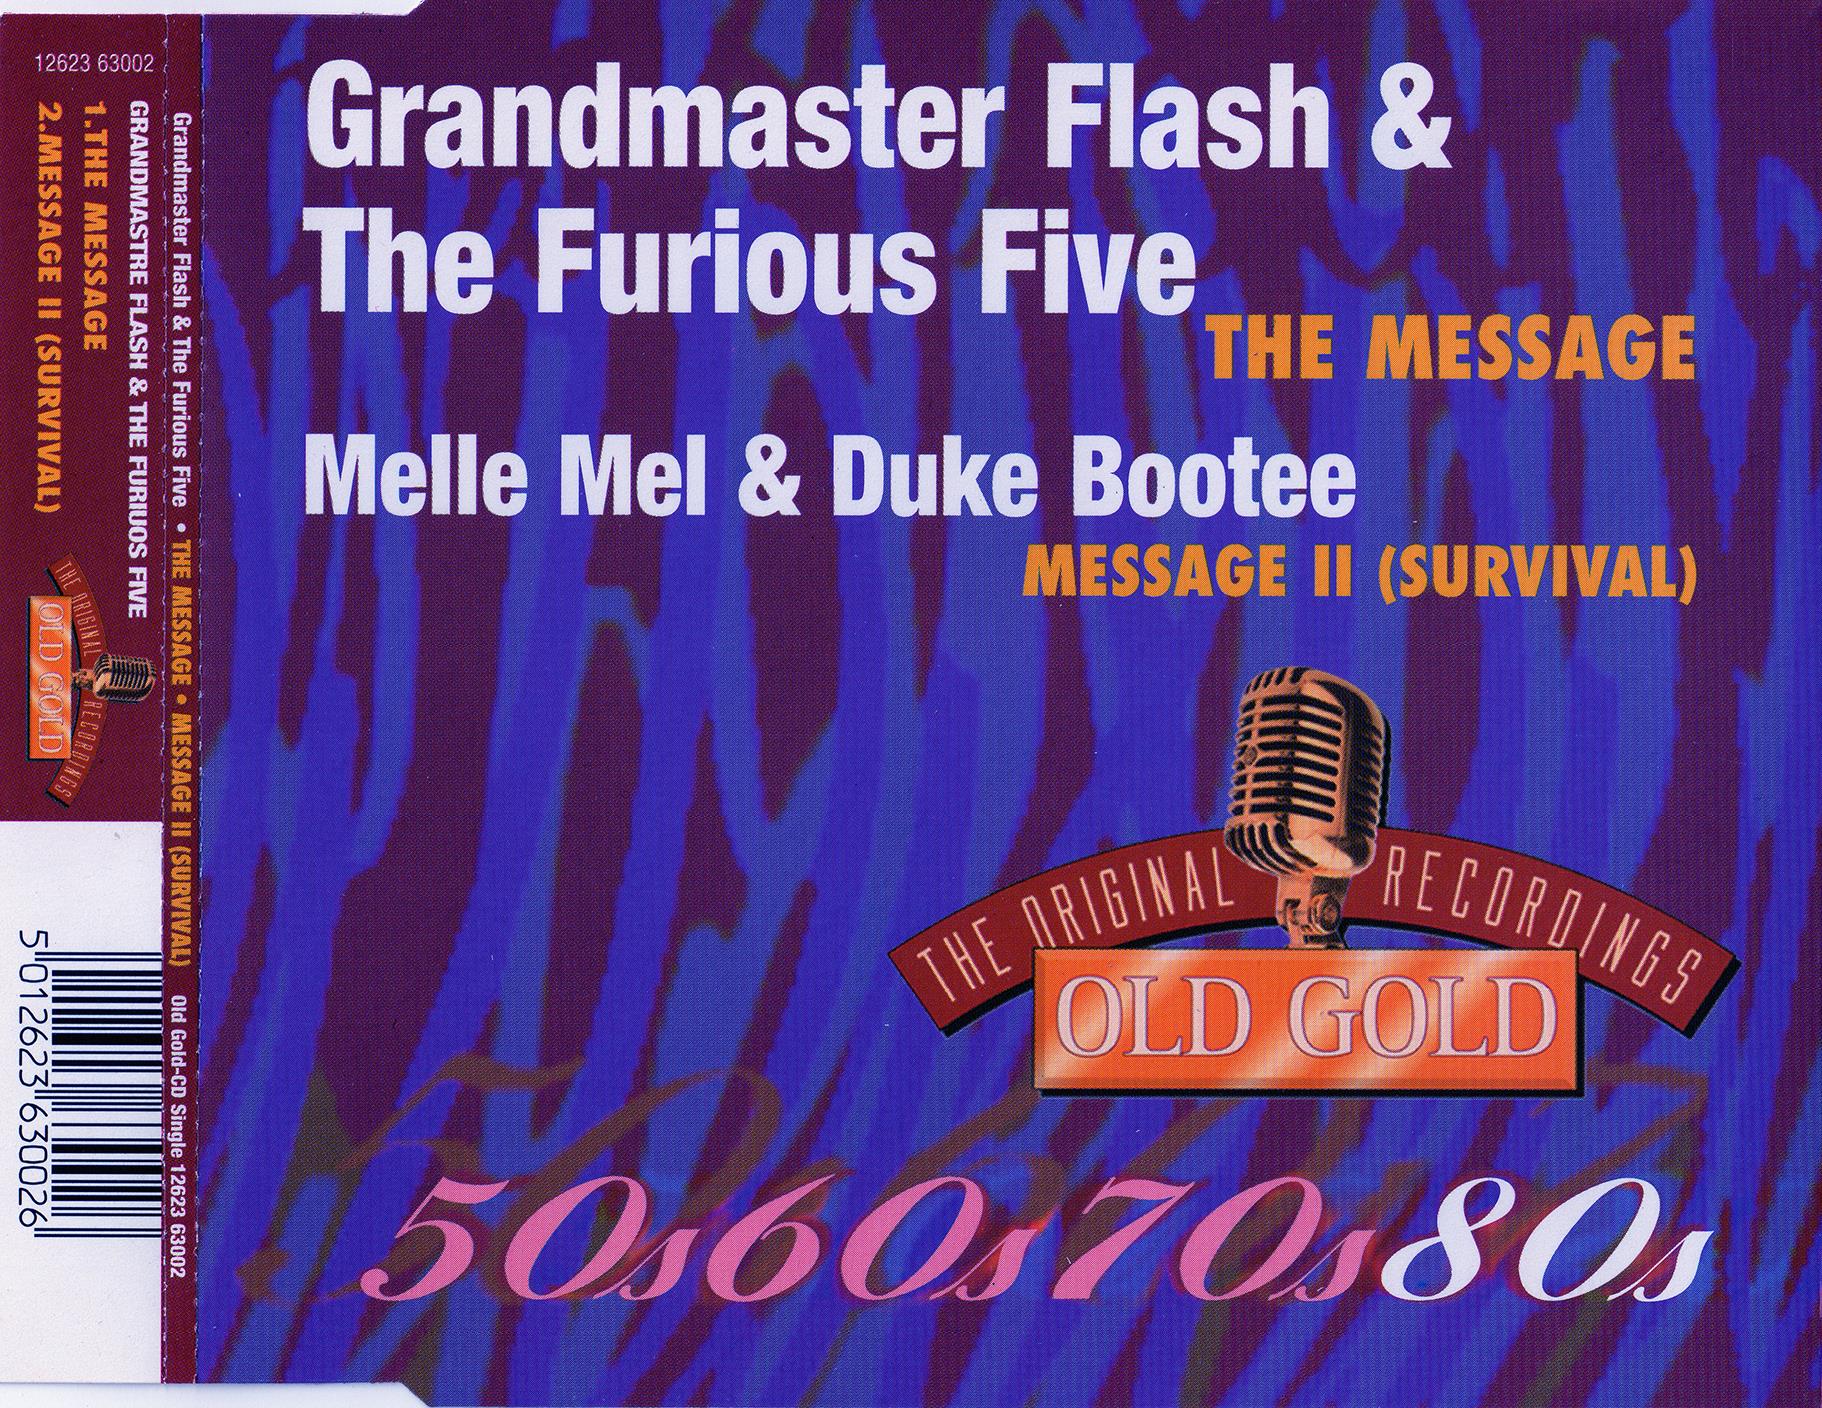 Grandmaster Flash & The Furious Five - The Message (Cdm)[1982]